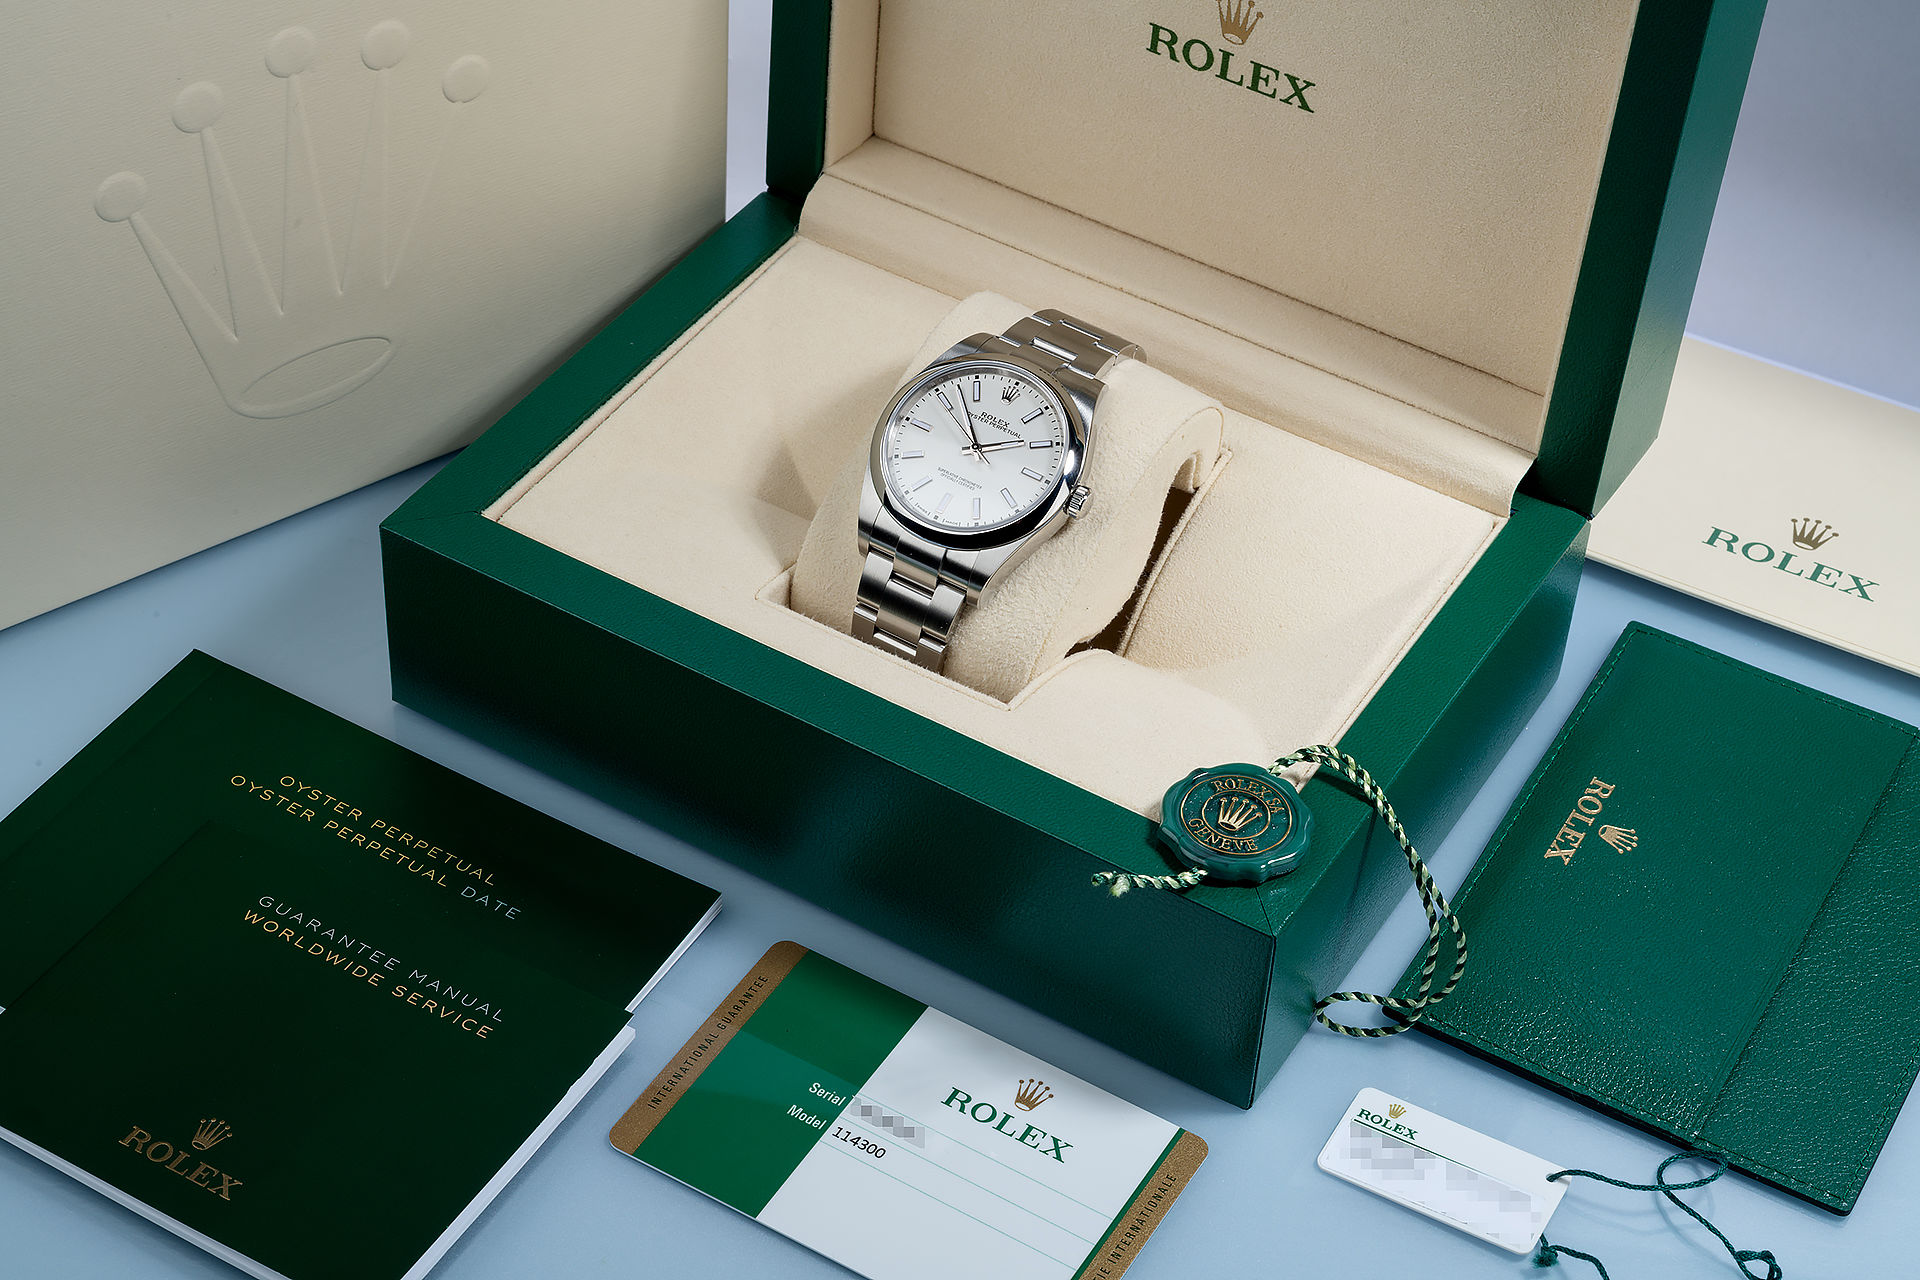 ref 114300 | 5 Year Warranty 'Full Set' | Rolex Oyster Perpetual